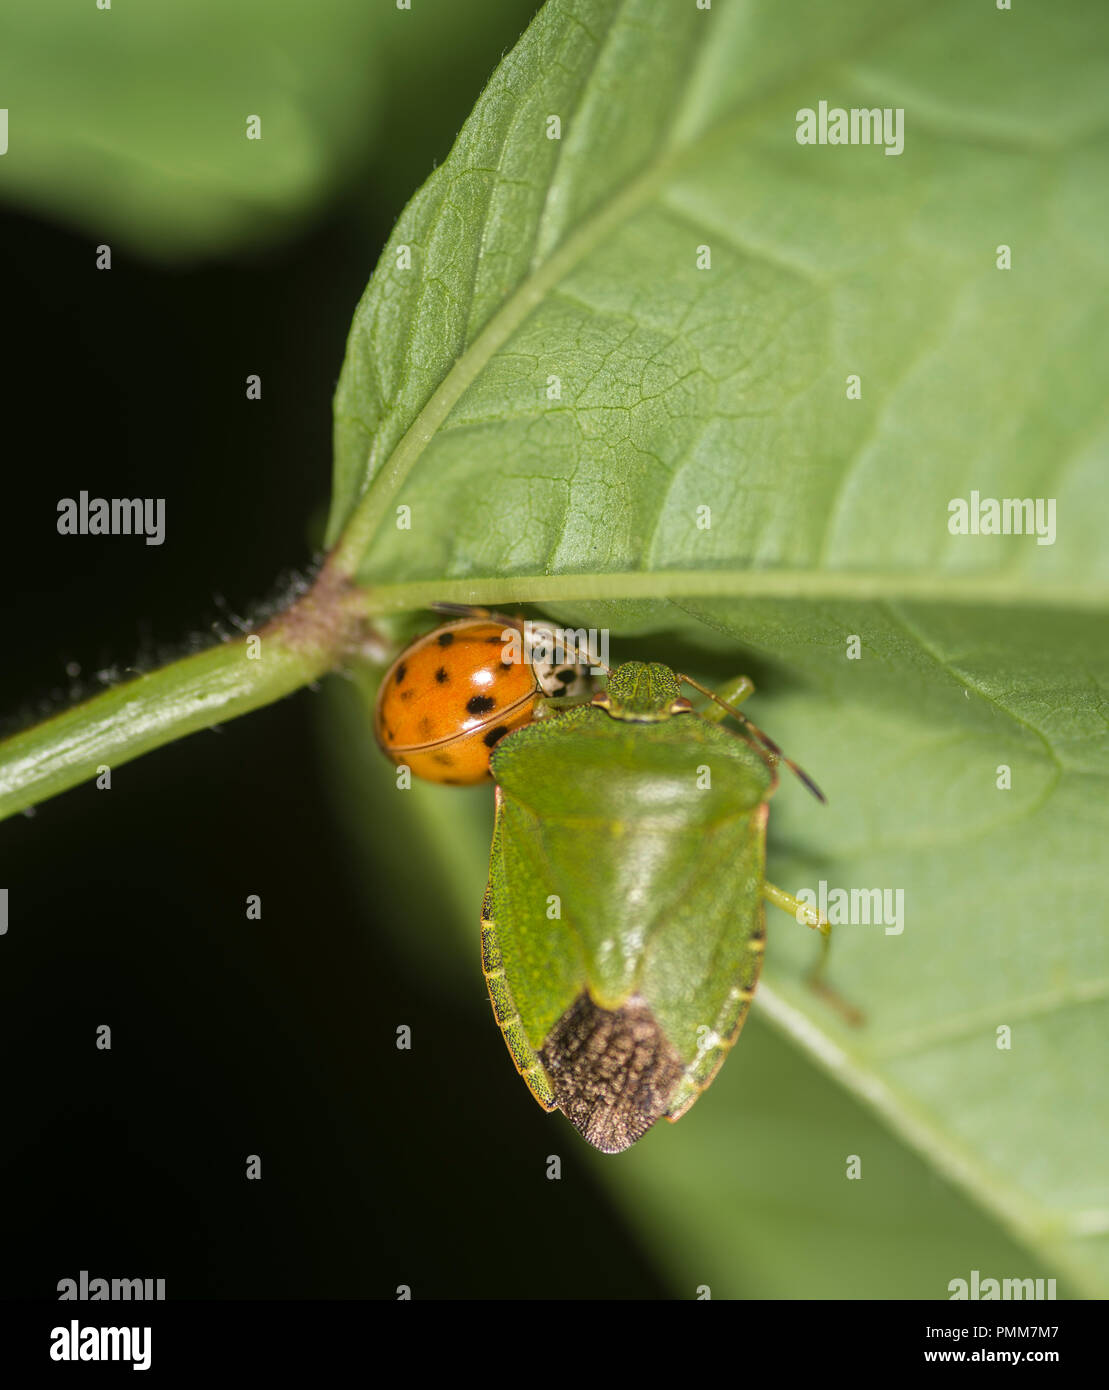 Ladybug and shield bug fighting on a green leaf Stock Photo